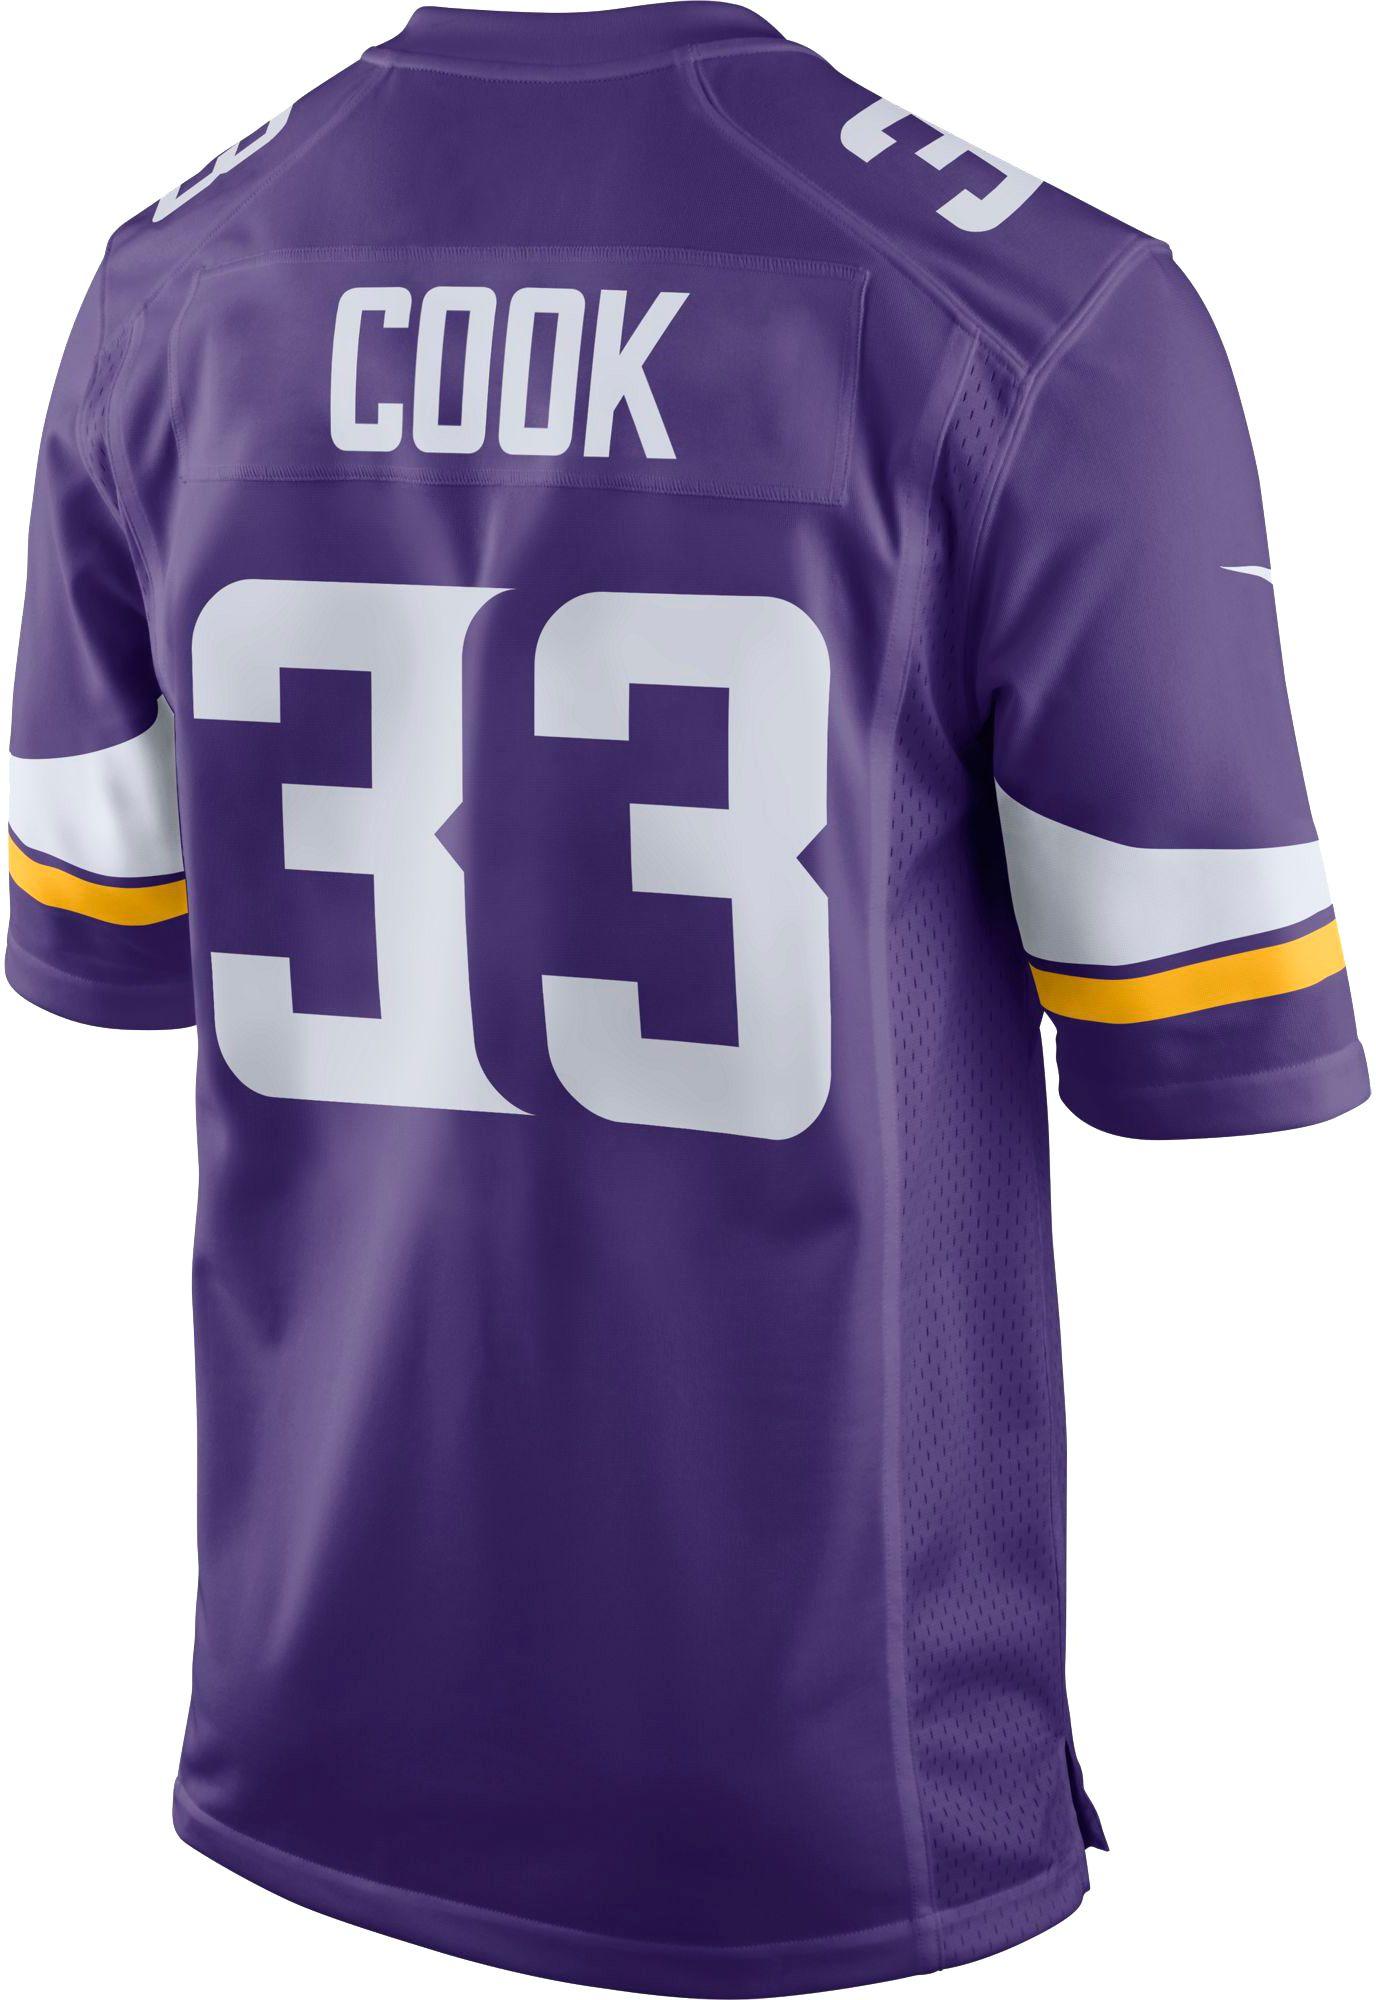 Nike Satin Home Game Jersey Minnesota Vikings Dalvin Cook #33 in Purple ...